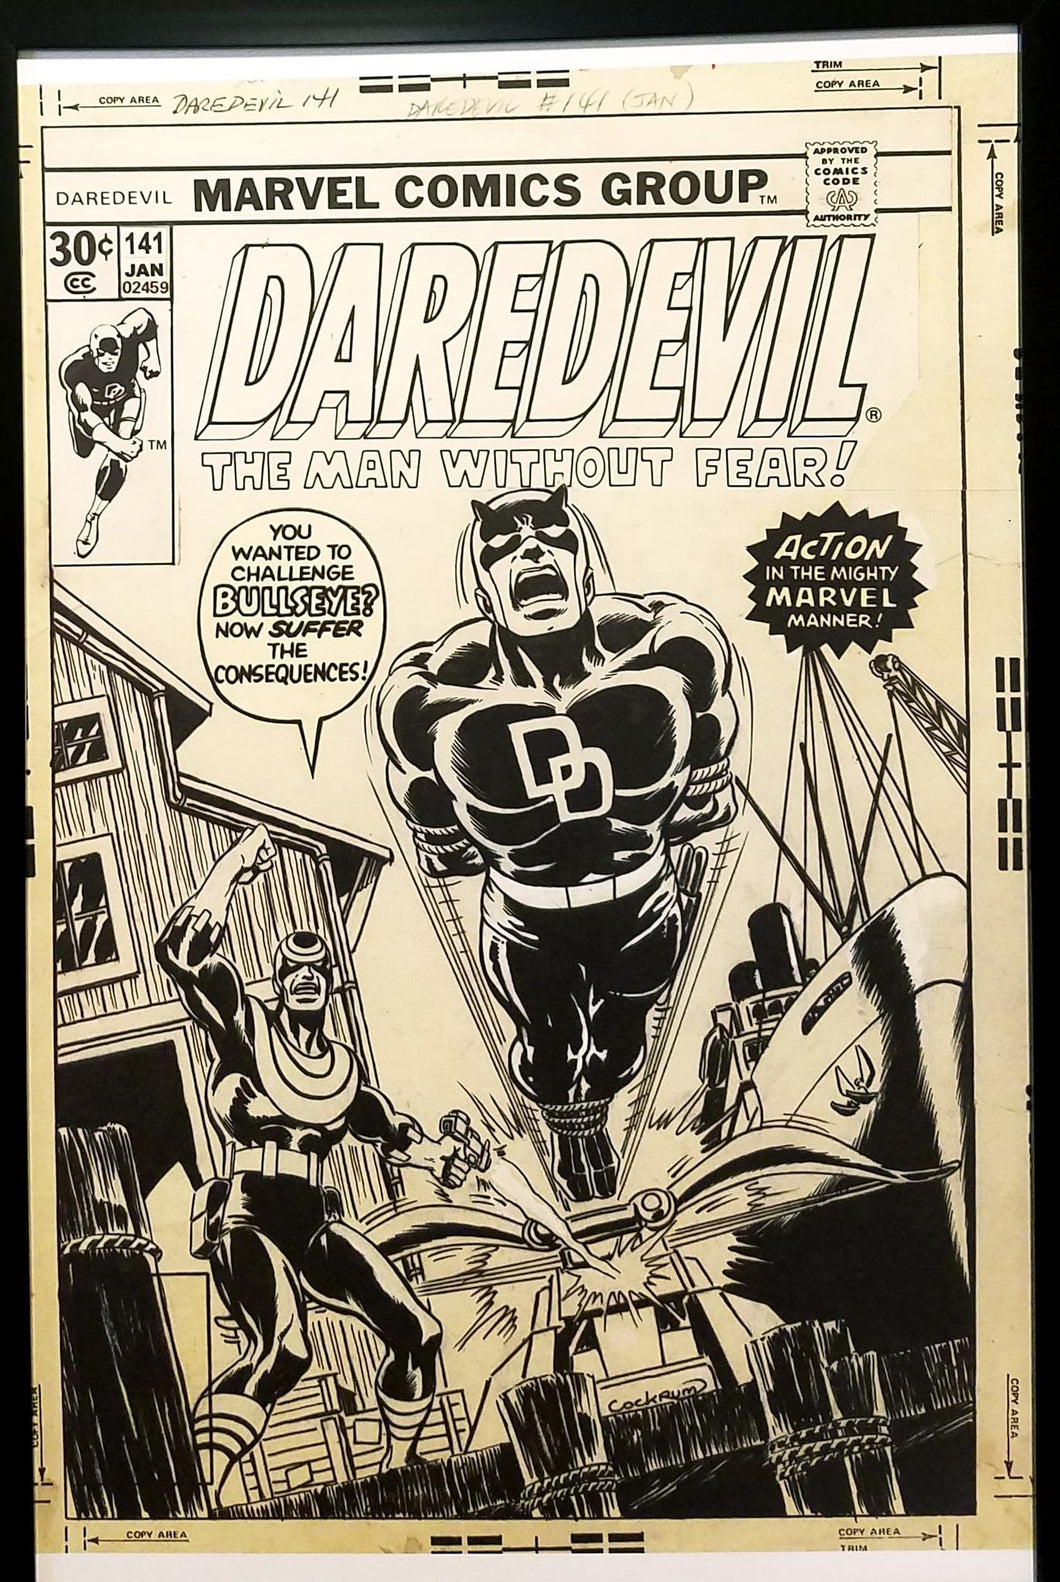 Daredevil #141 by Dave Cockrum 11x17 FRAMED Original Art Poster Marvel Comics